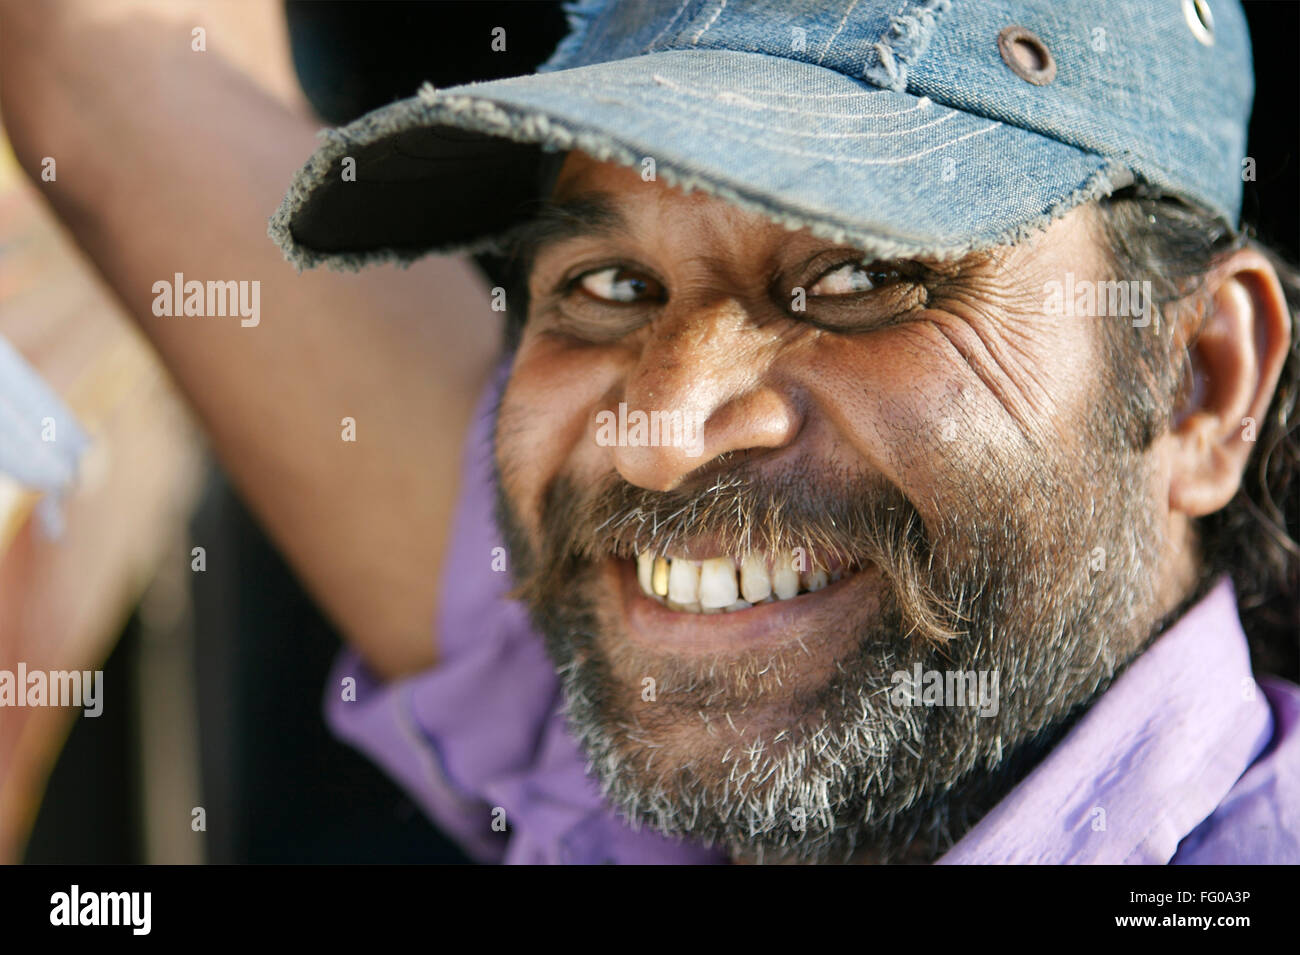 Gujarati man smiling wearing cap showing gold cap teeth sporting beard MR#711 Stock Photo